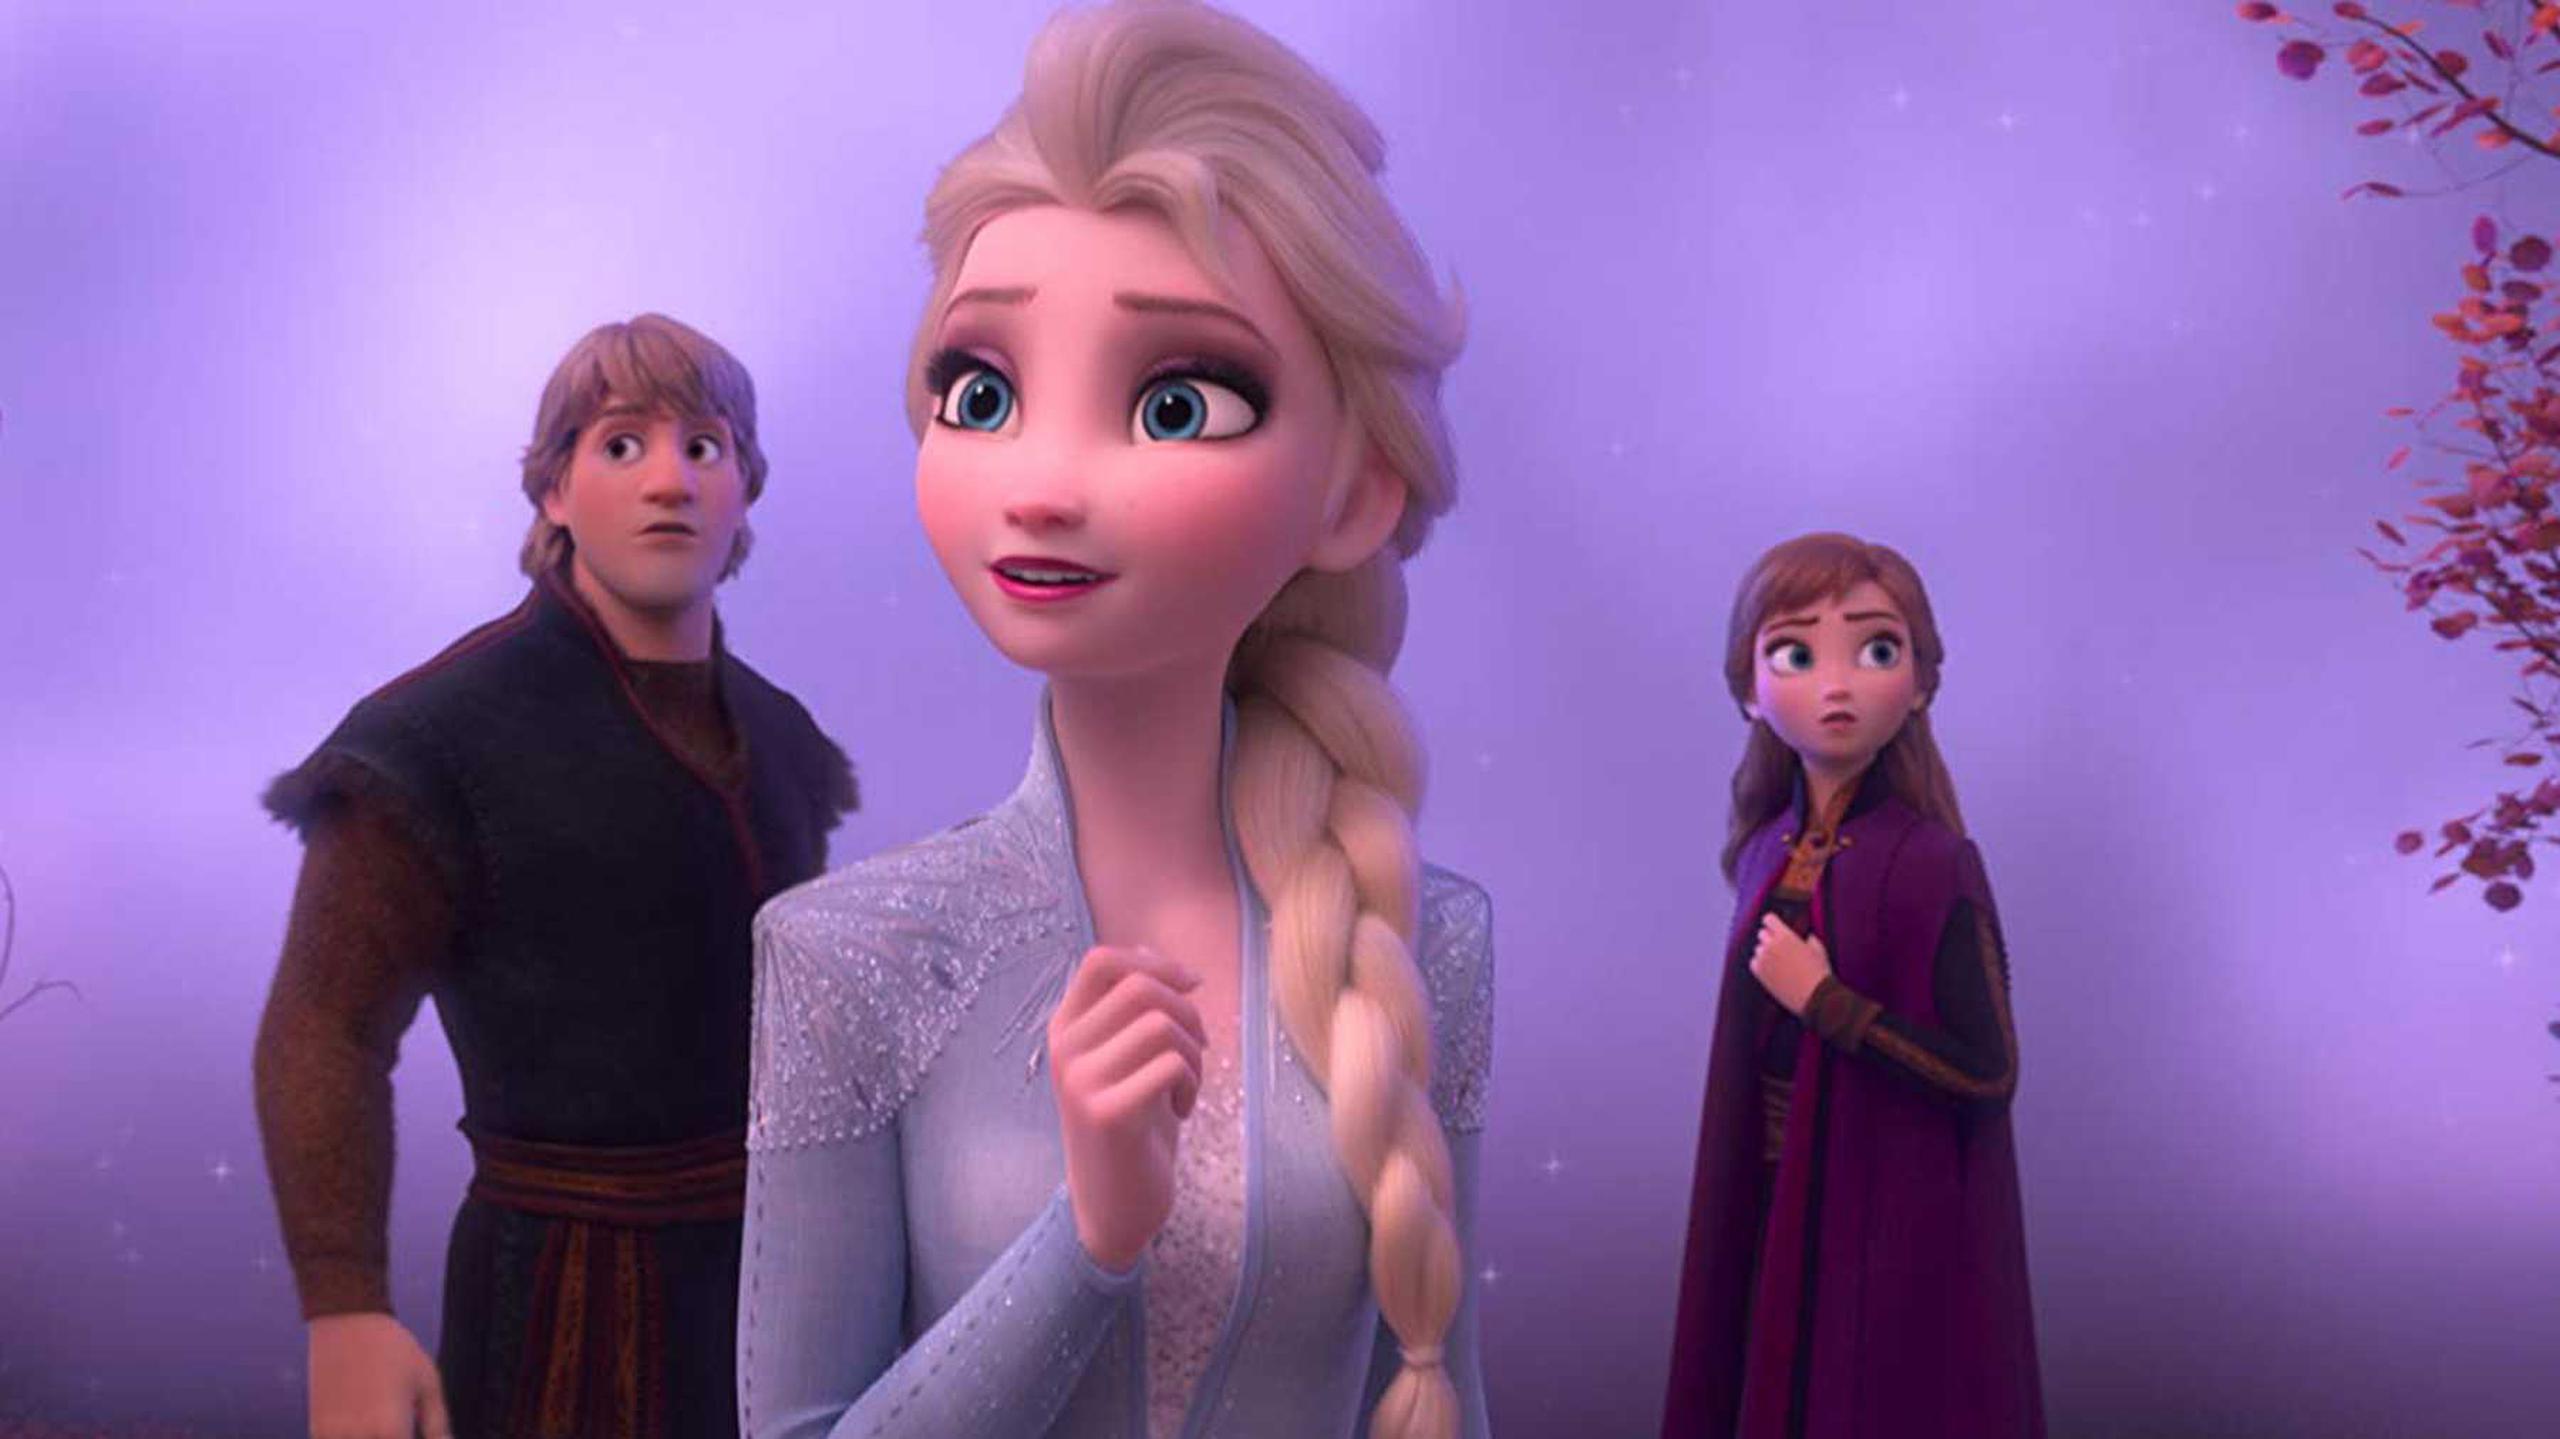 "Frozen 2" recaudó más de $1.4 billones en boletos a nivel mundial. (Captura / internet)